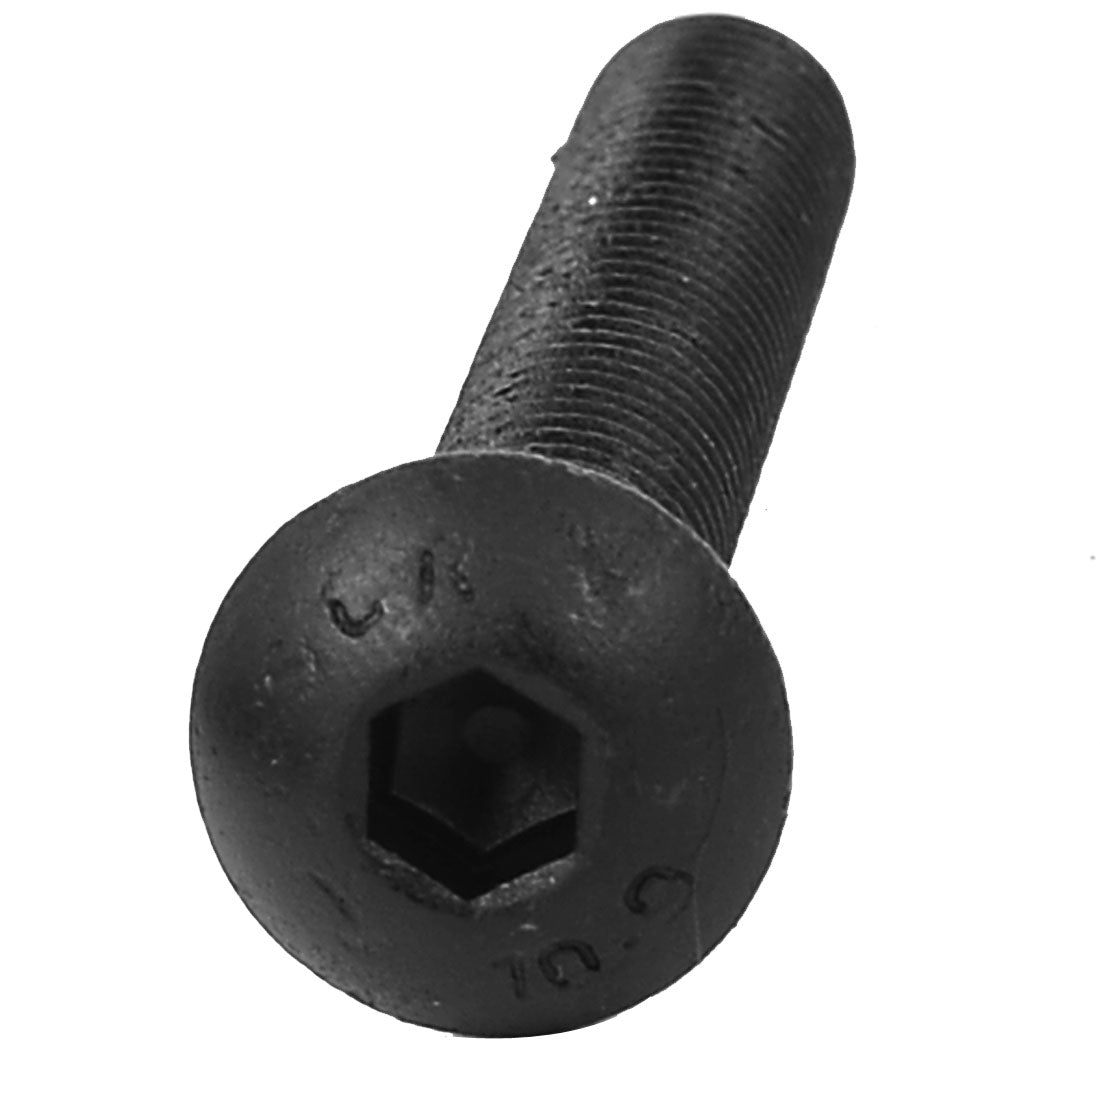 Uxcell Uxcell M10x65mm 10.9 Alloy Steel Button Head Hex Socket Cap Screw Bolt Black 8pcs